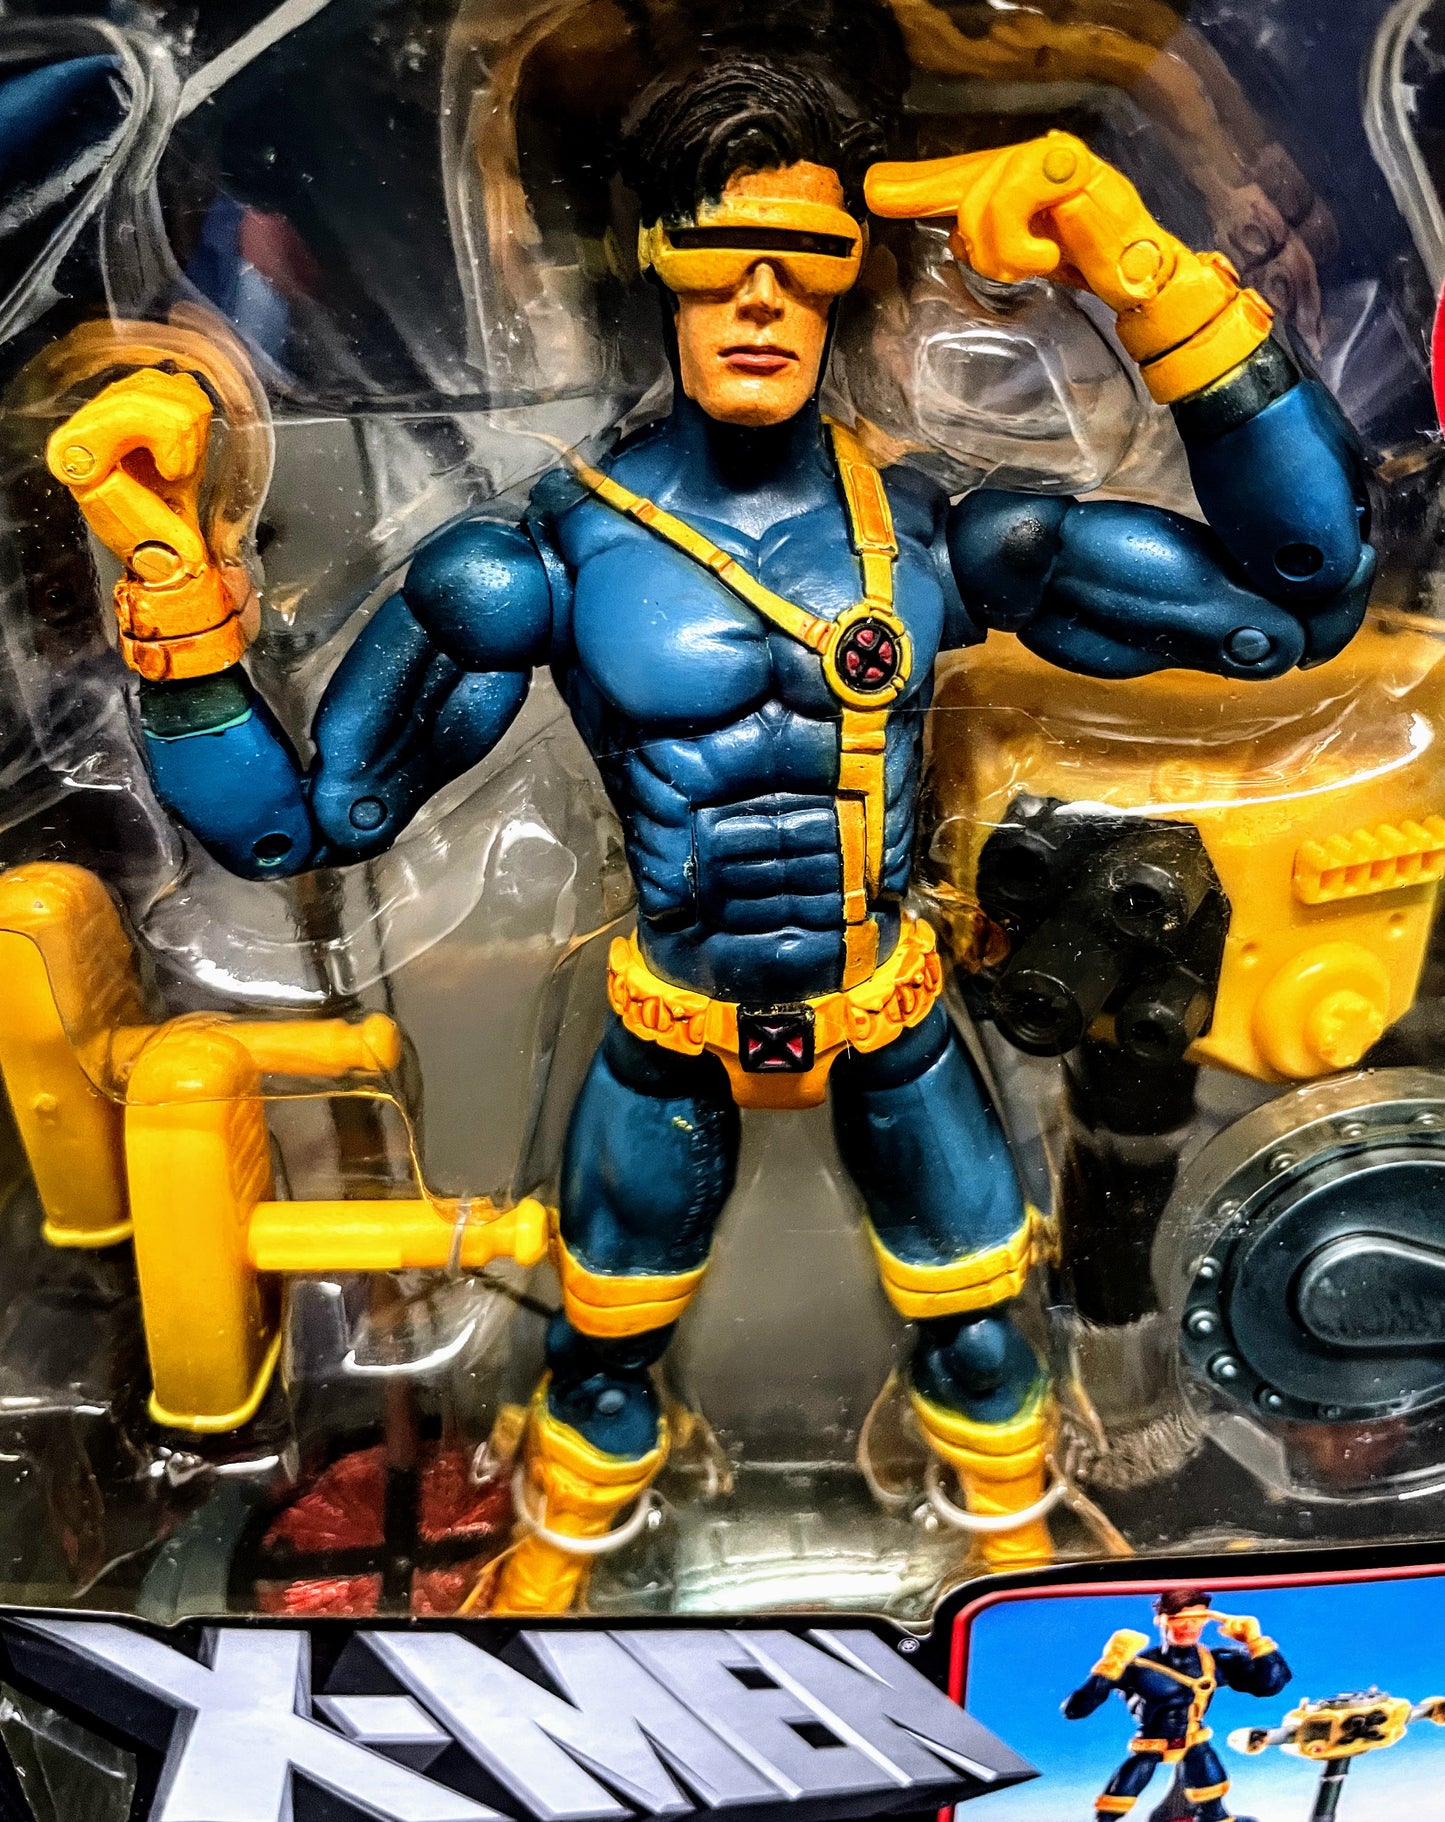 Cyclops with Optic Blast Action